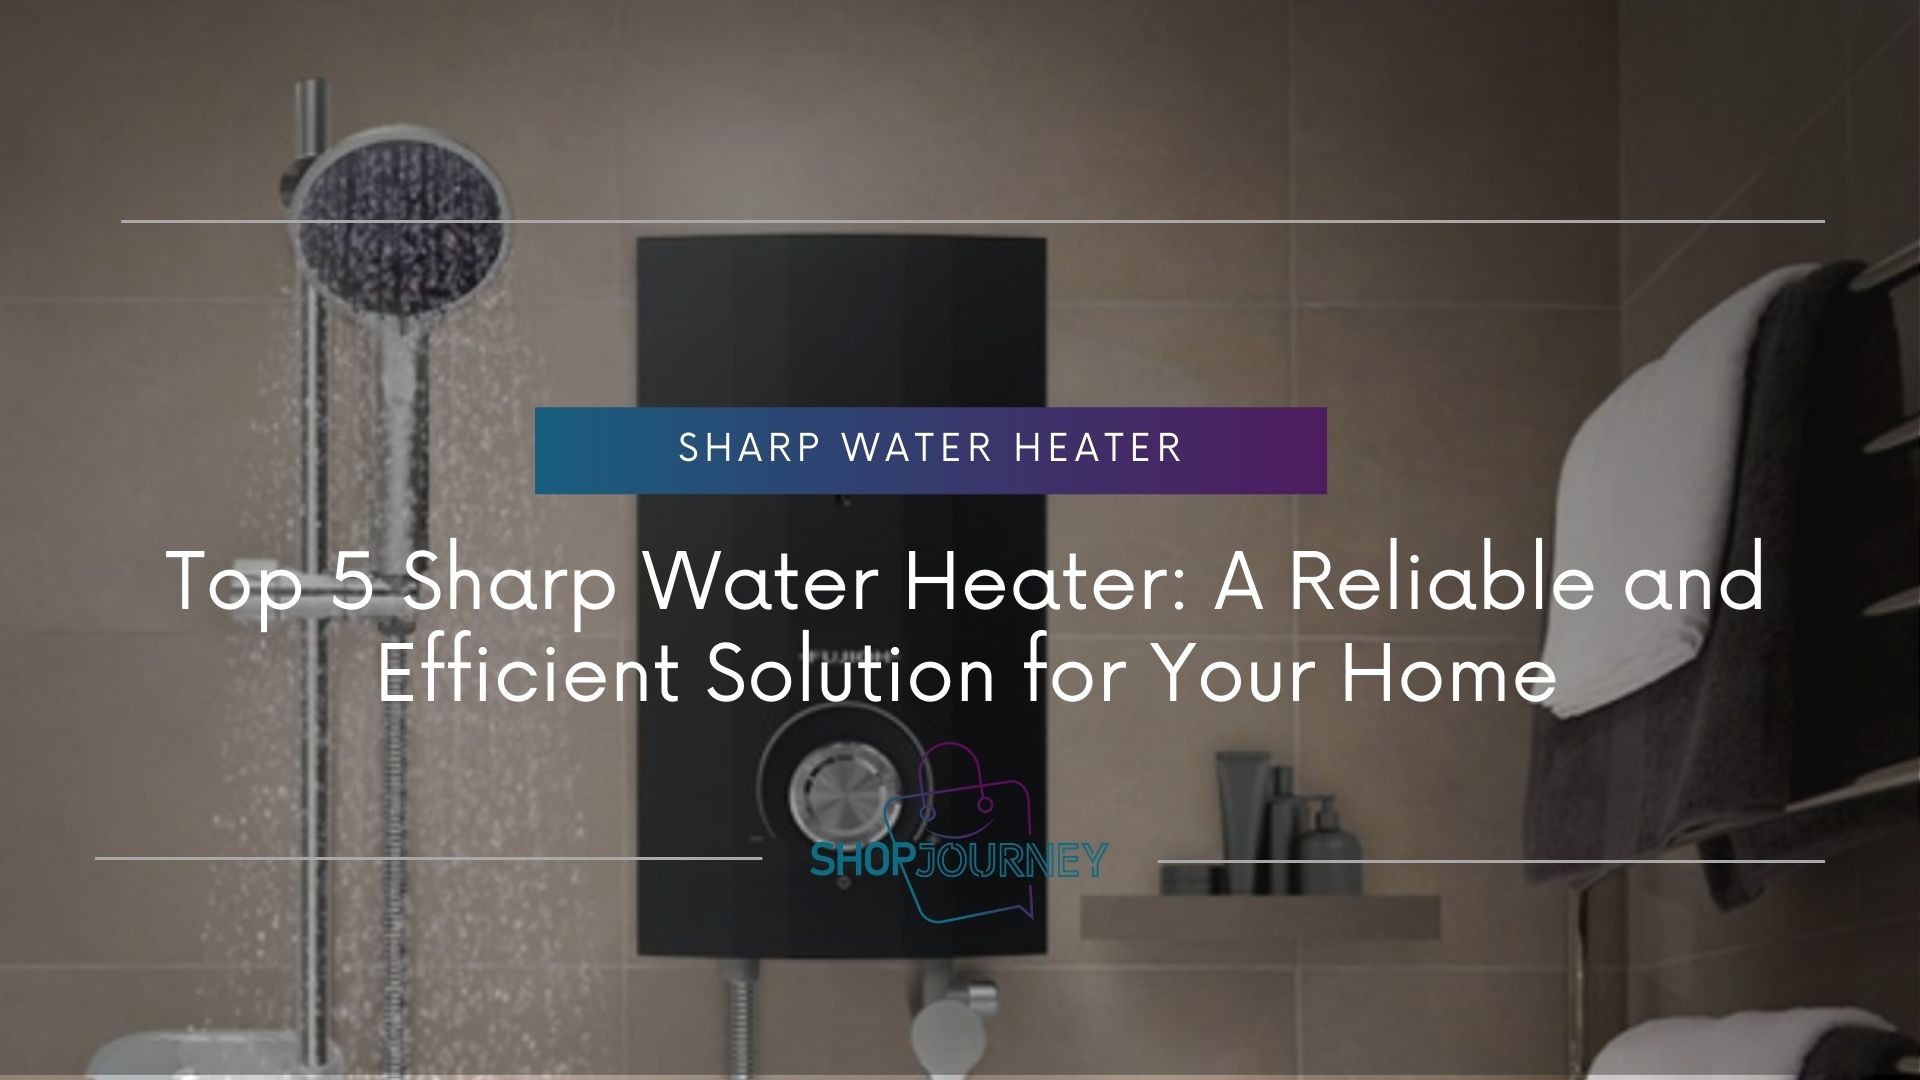 Sharp water heater - shop journey